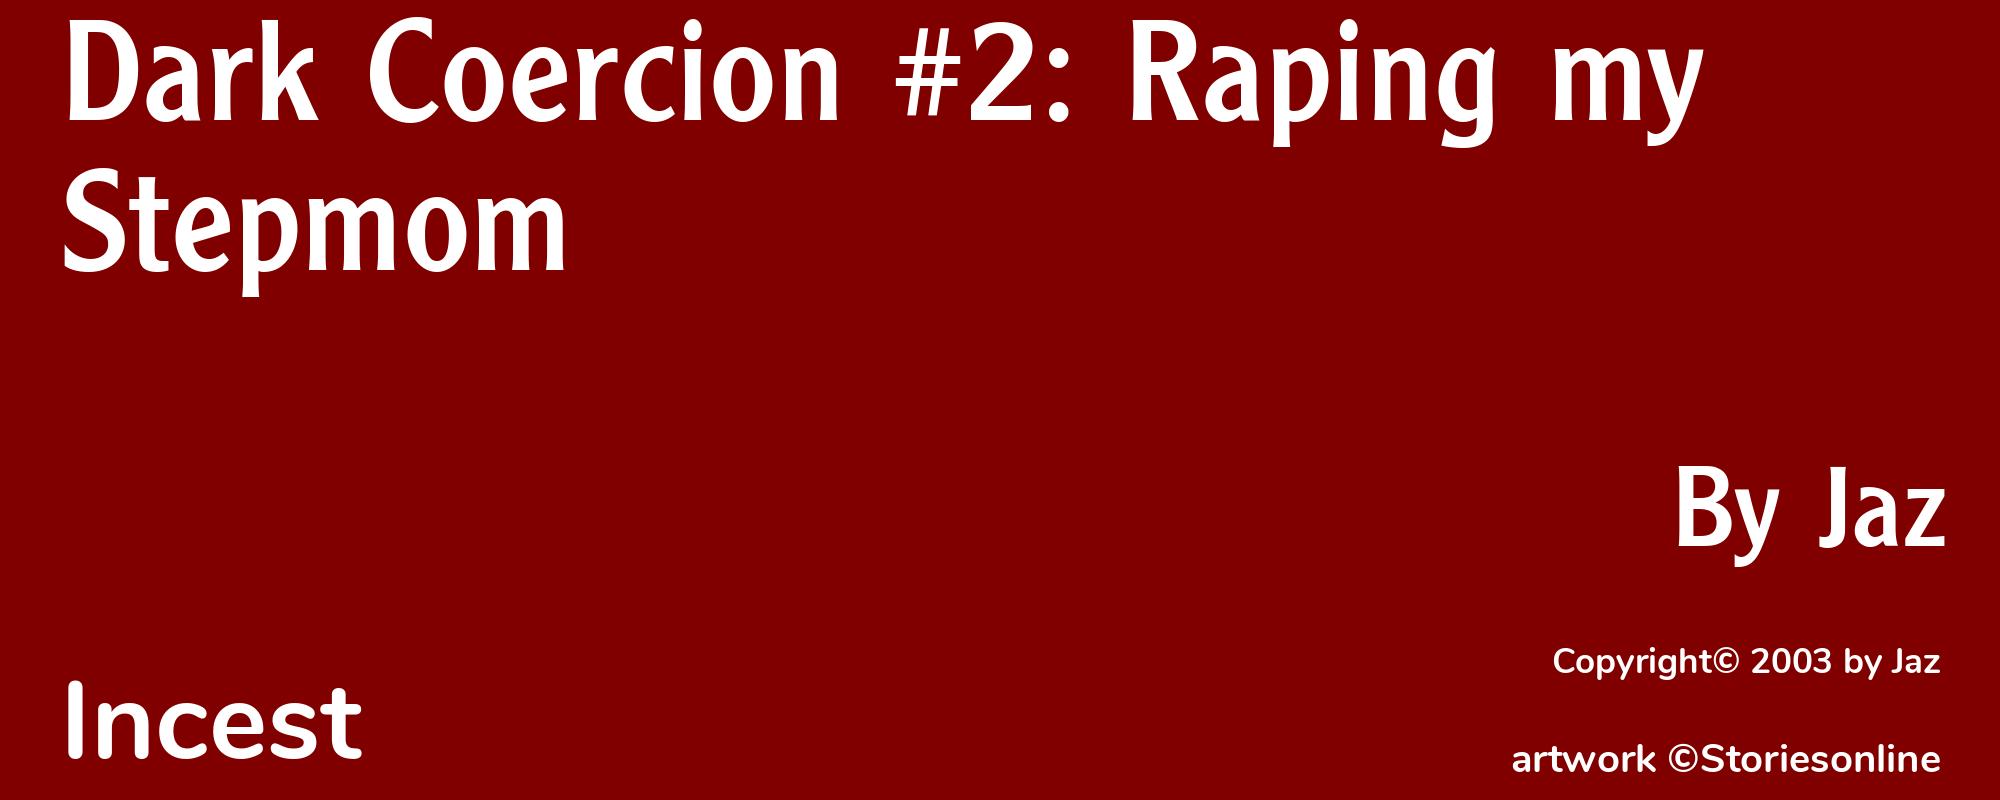 Dark Coercion #2: Raping my Stepmom - Cover